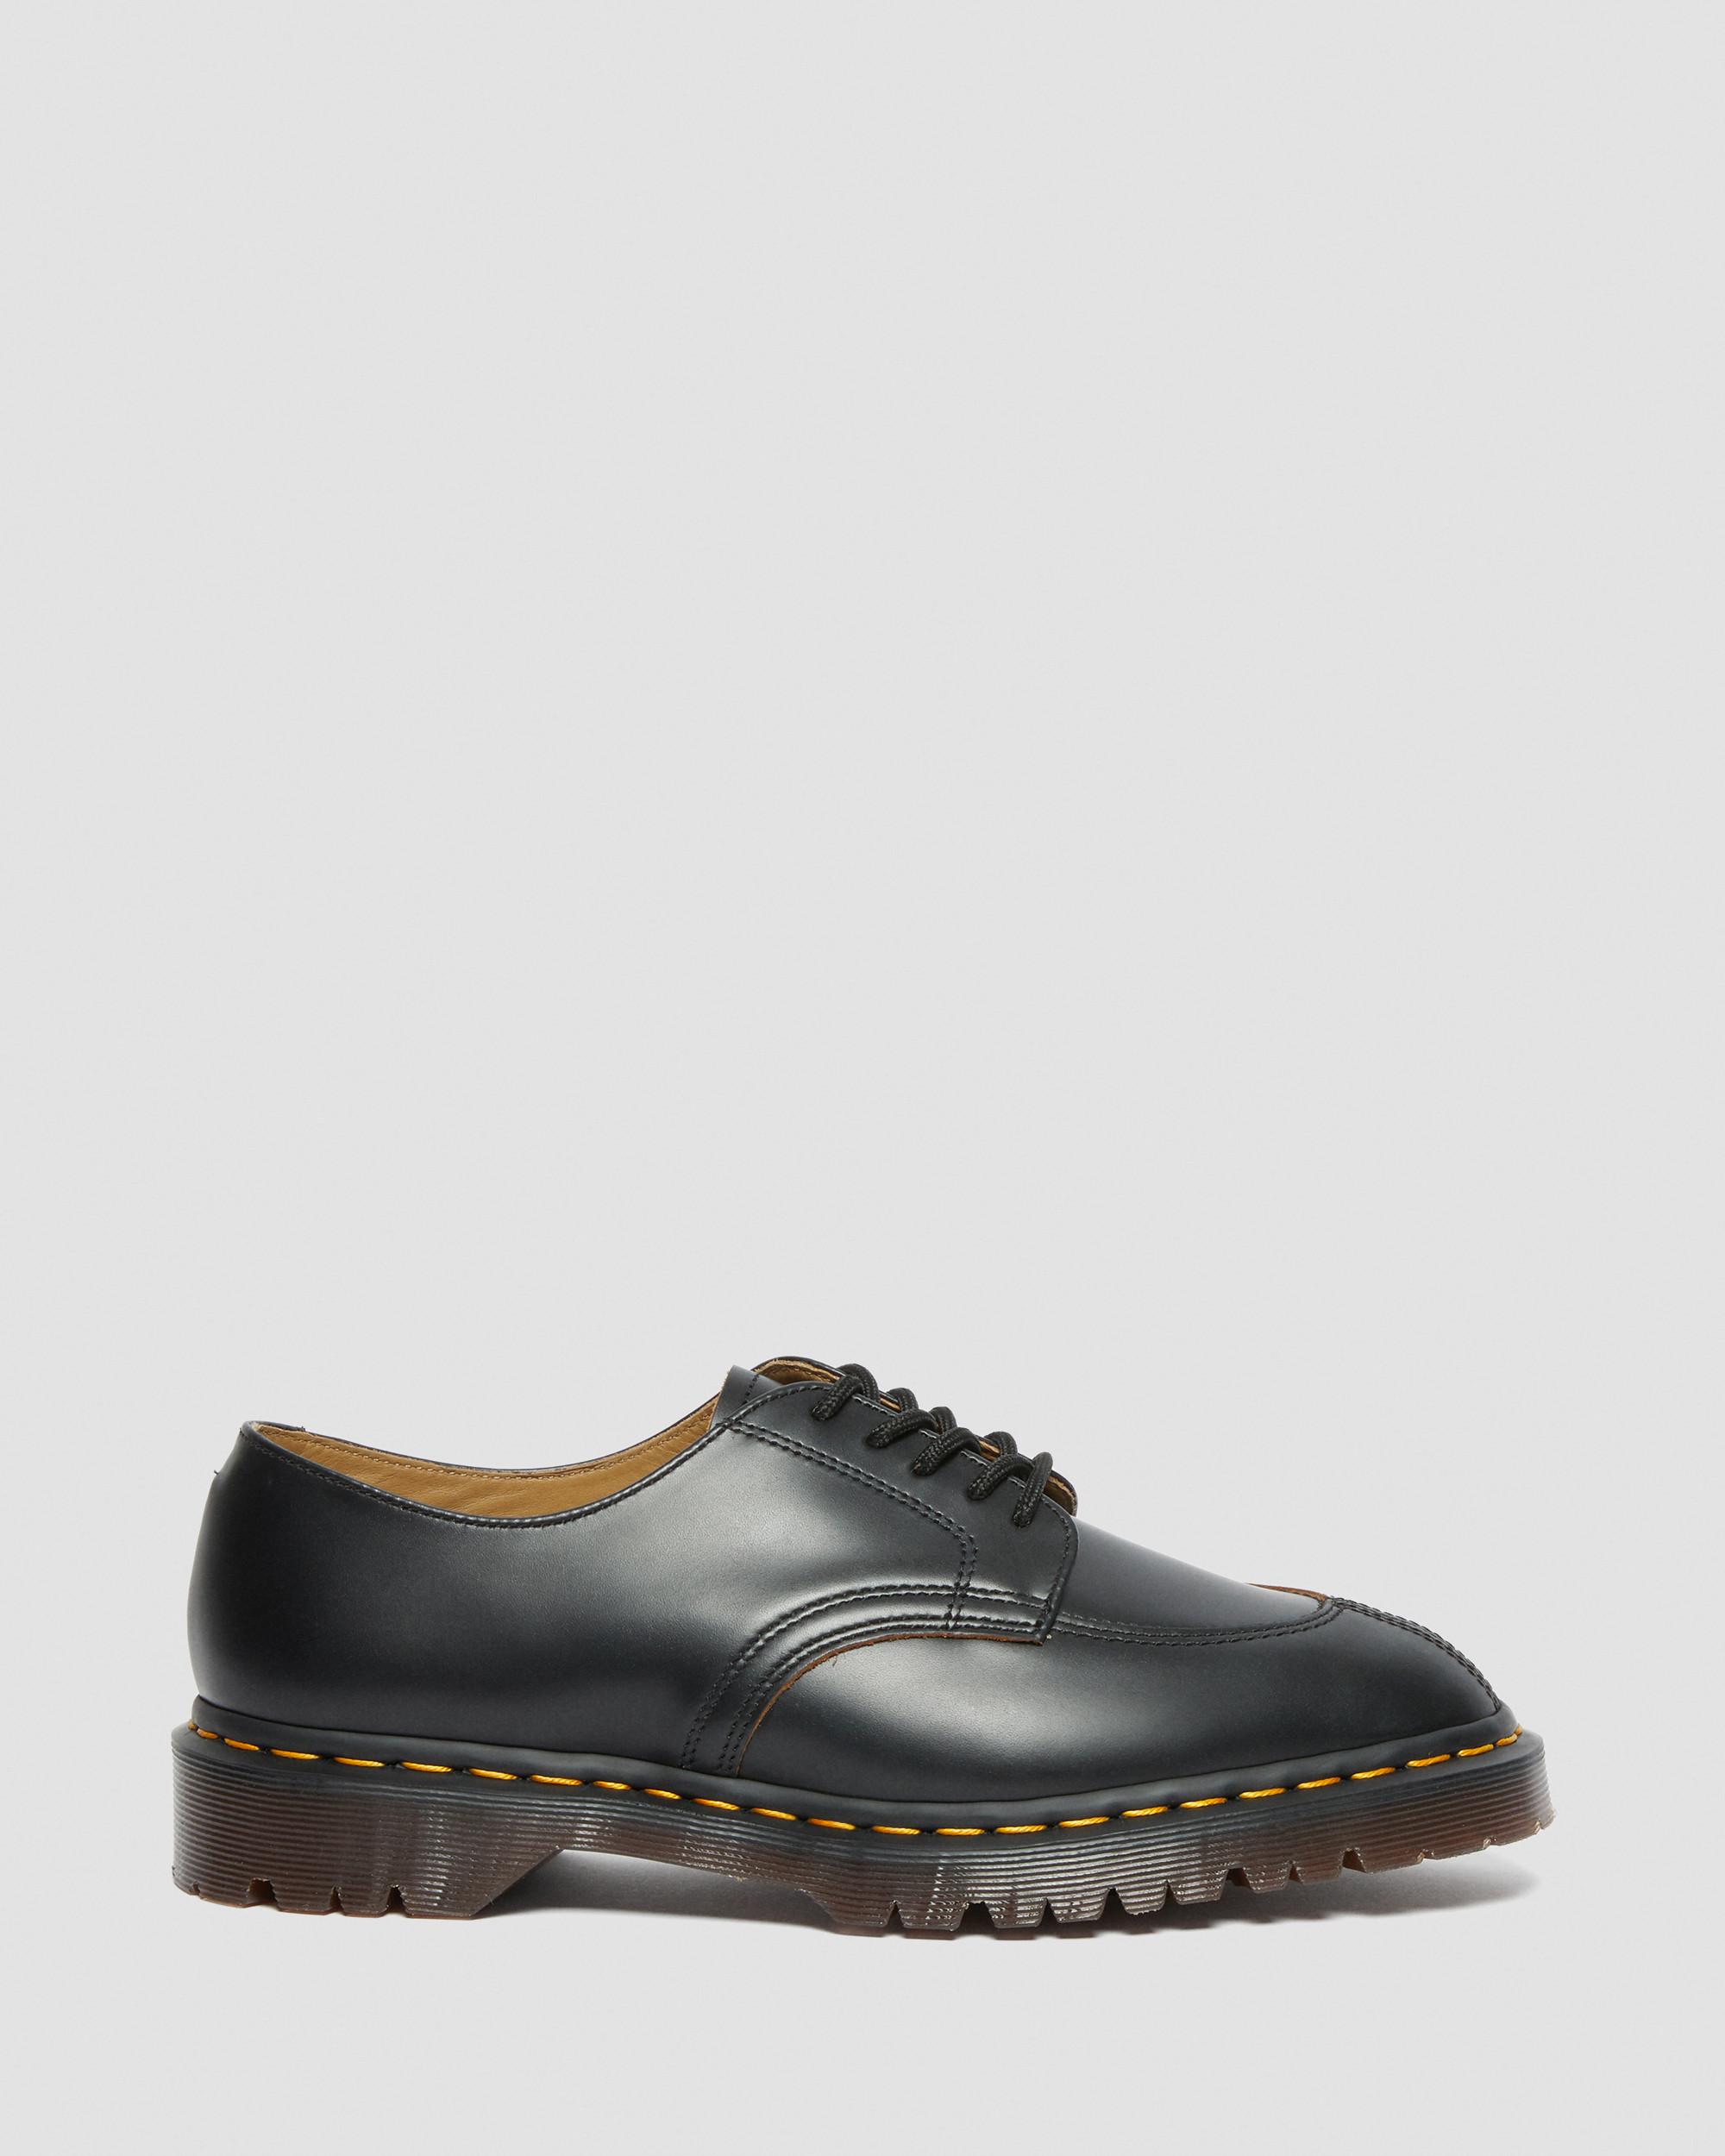 2046 Vintage Smooth Leather Shoes | Dr. Martens